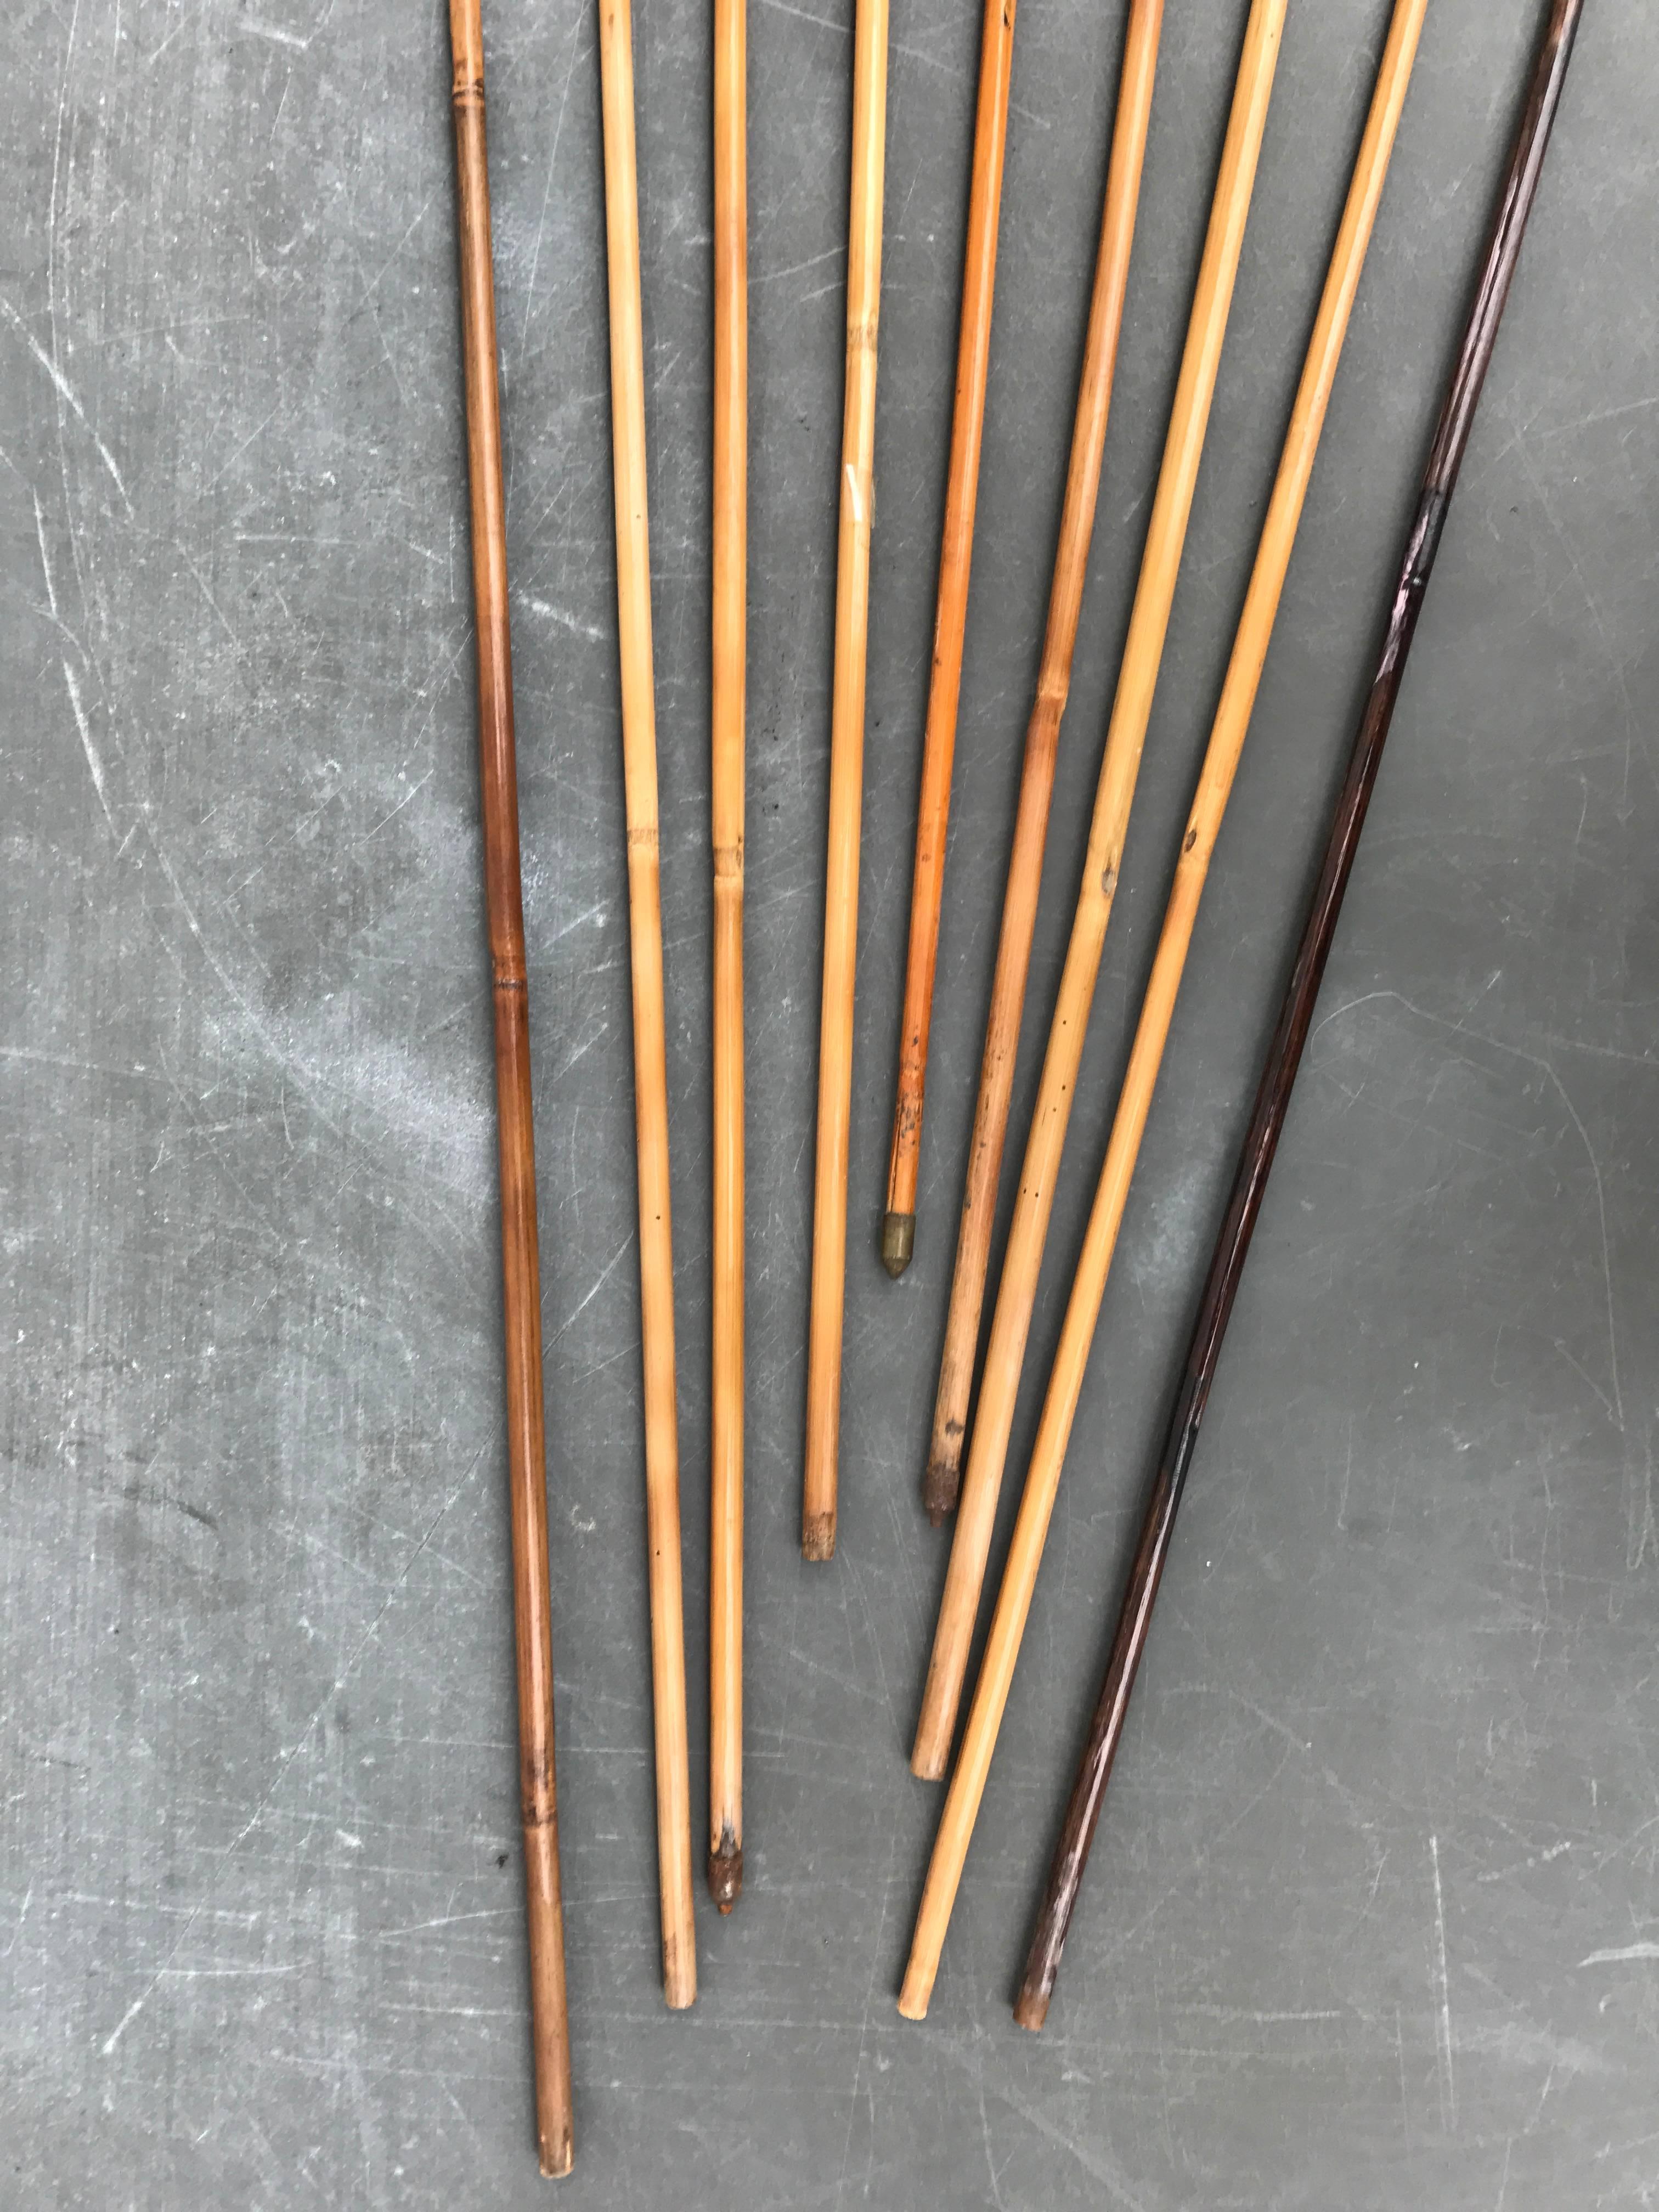 Taisho Japanese Antique Collection of Nine Old Samurai Handmade Bamboo Arrows